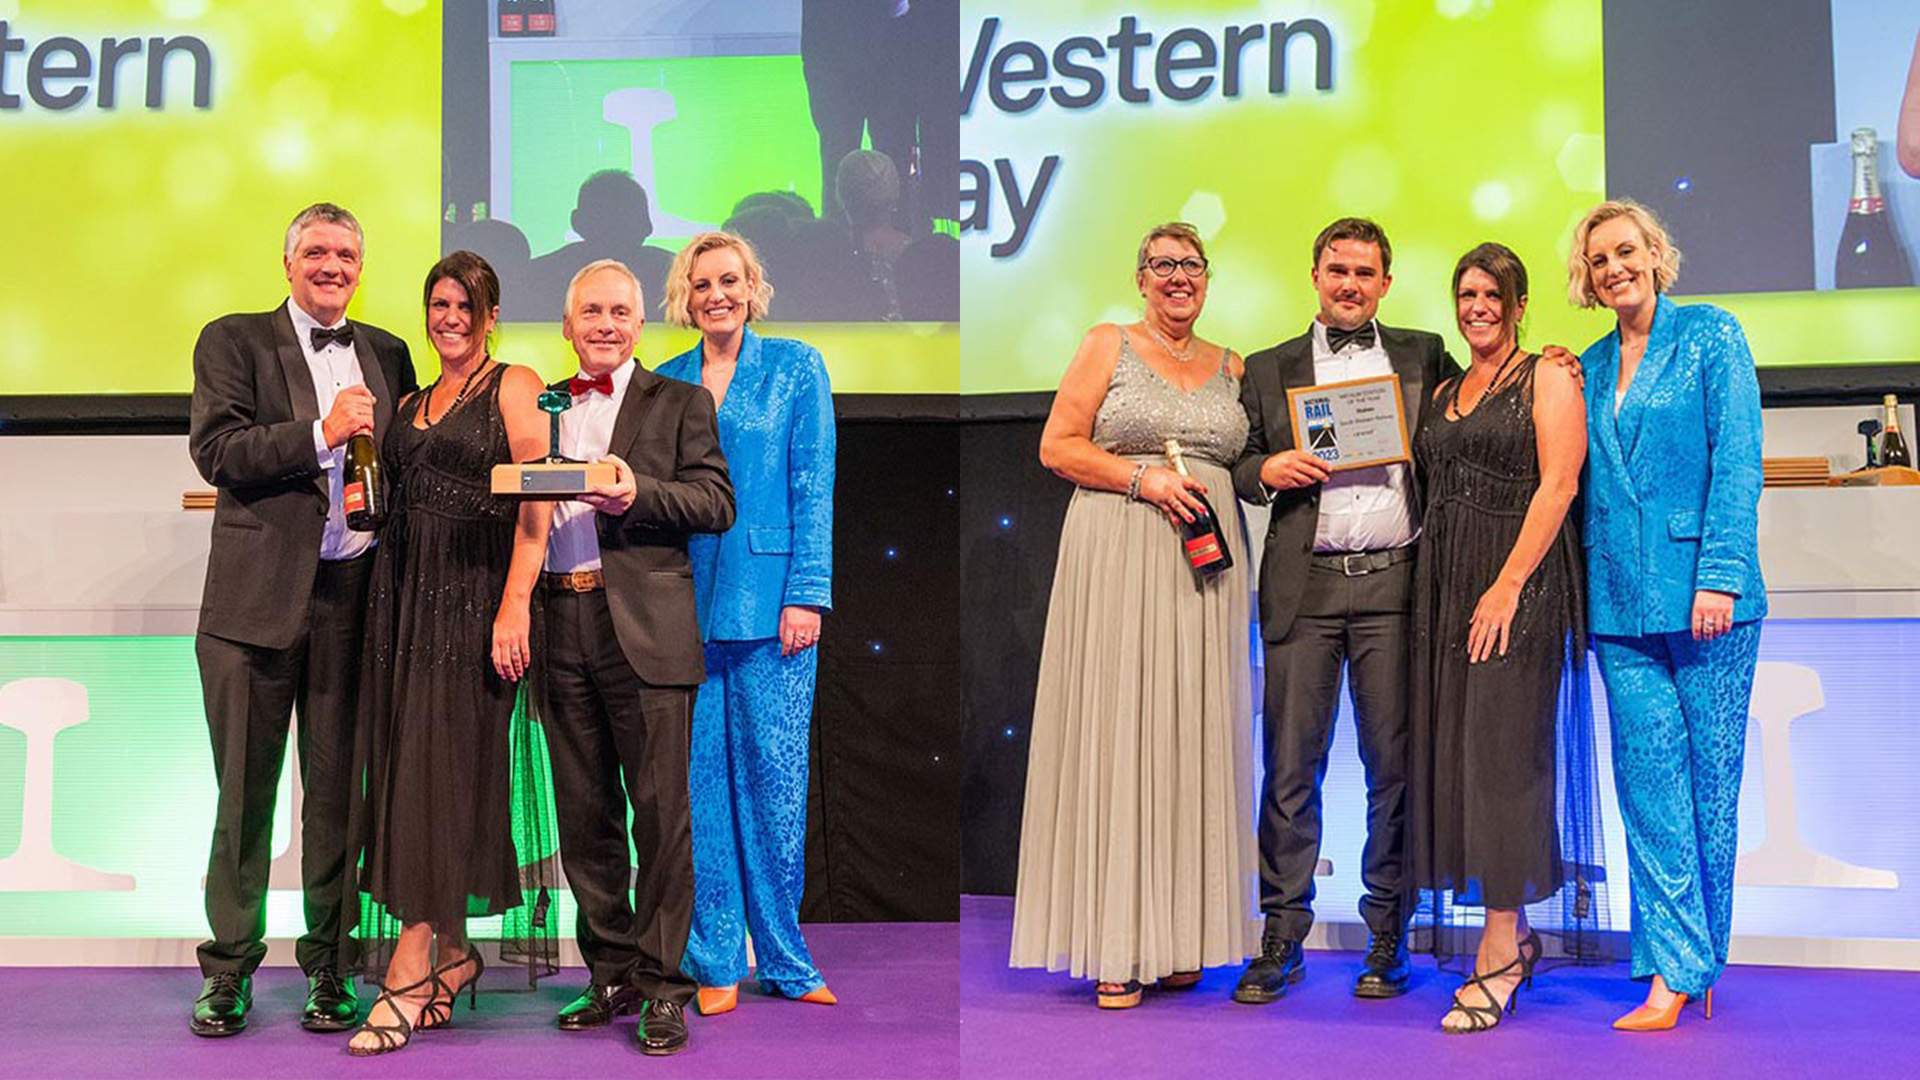 SWR National Rail Award winners